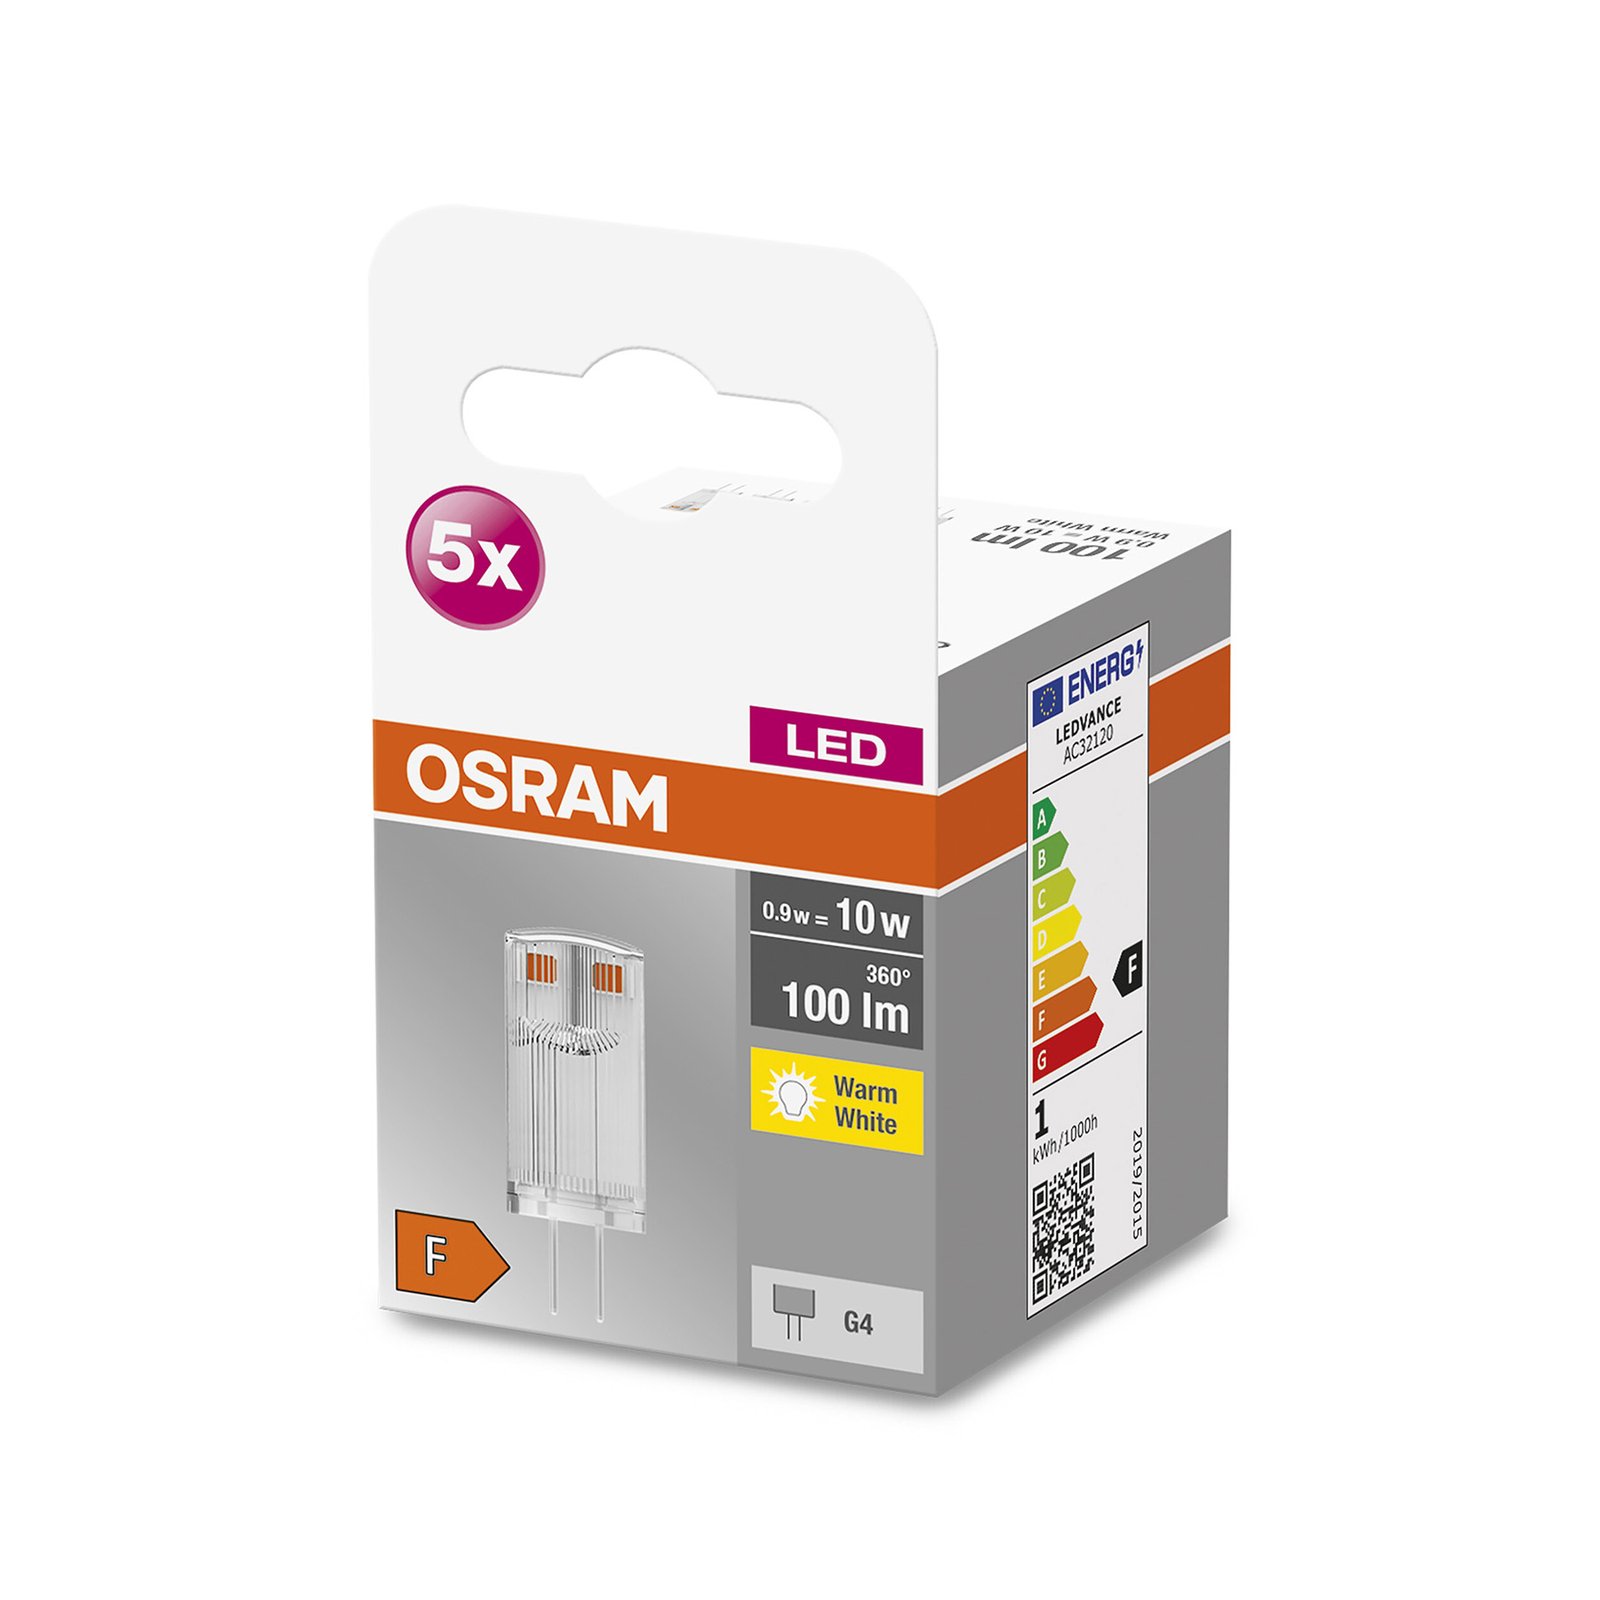 OSRAM Base PIN LED pin base G4 0.9W 100lm 5s